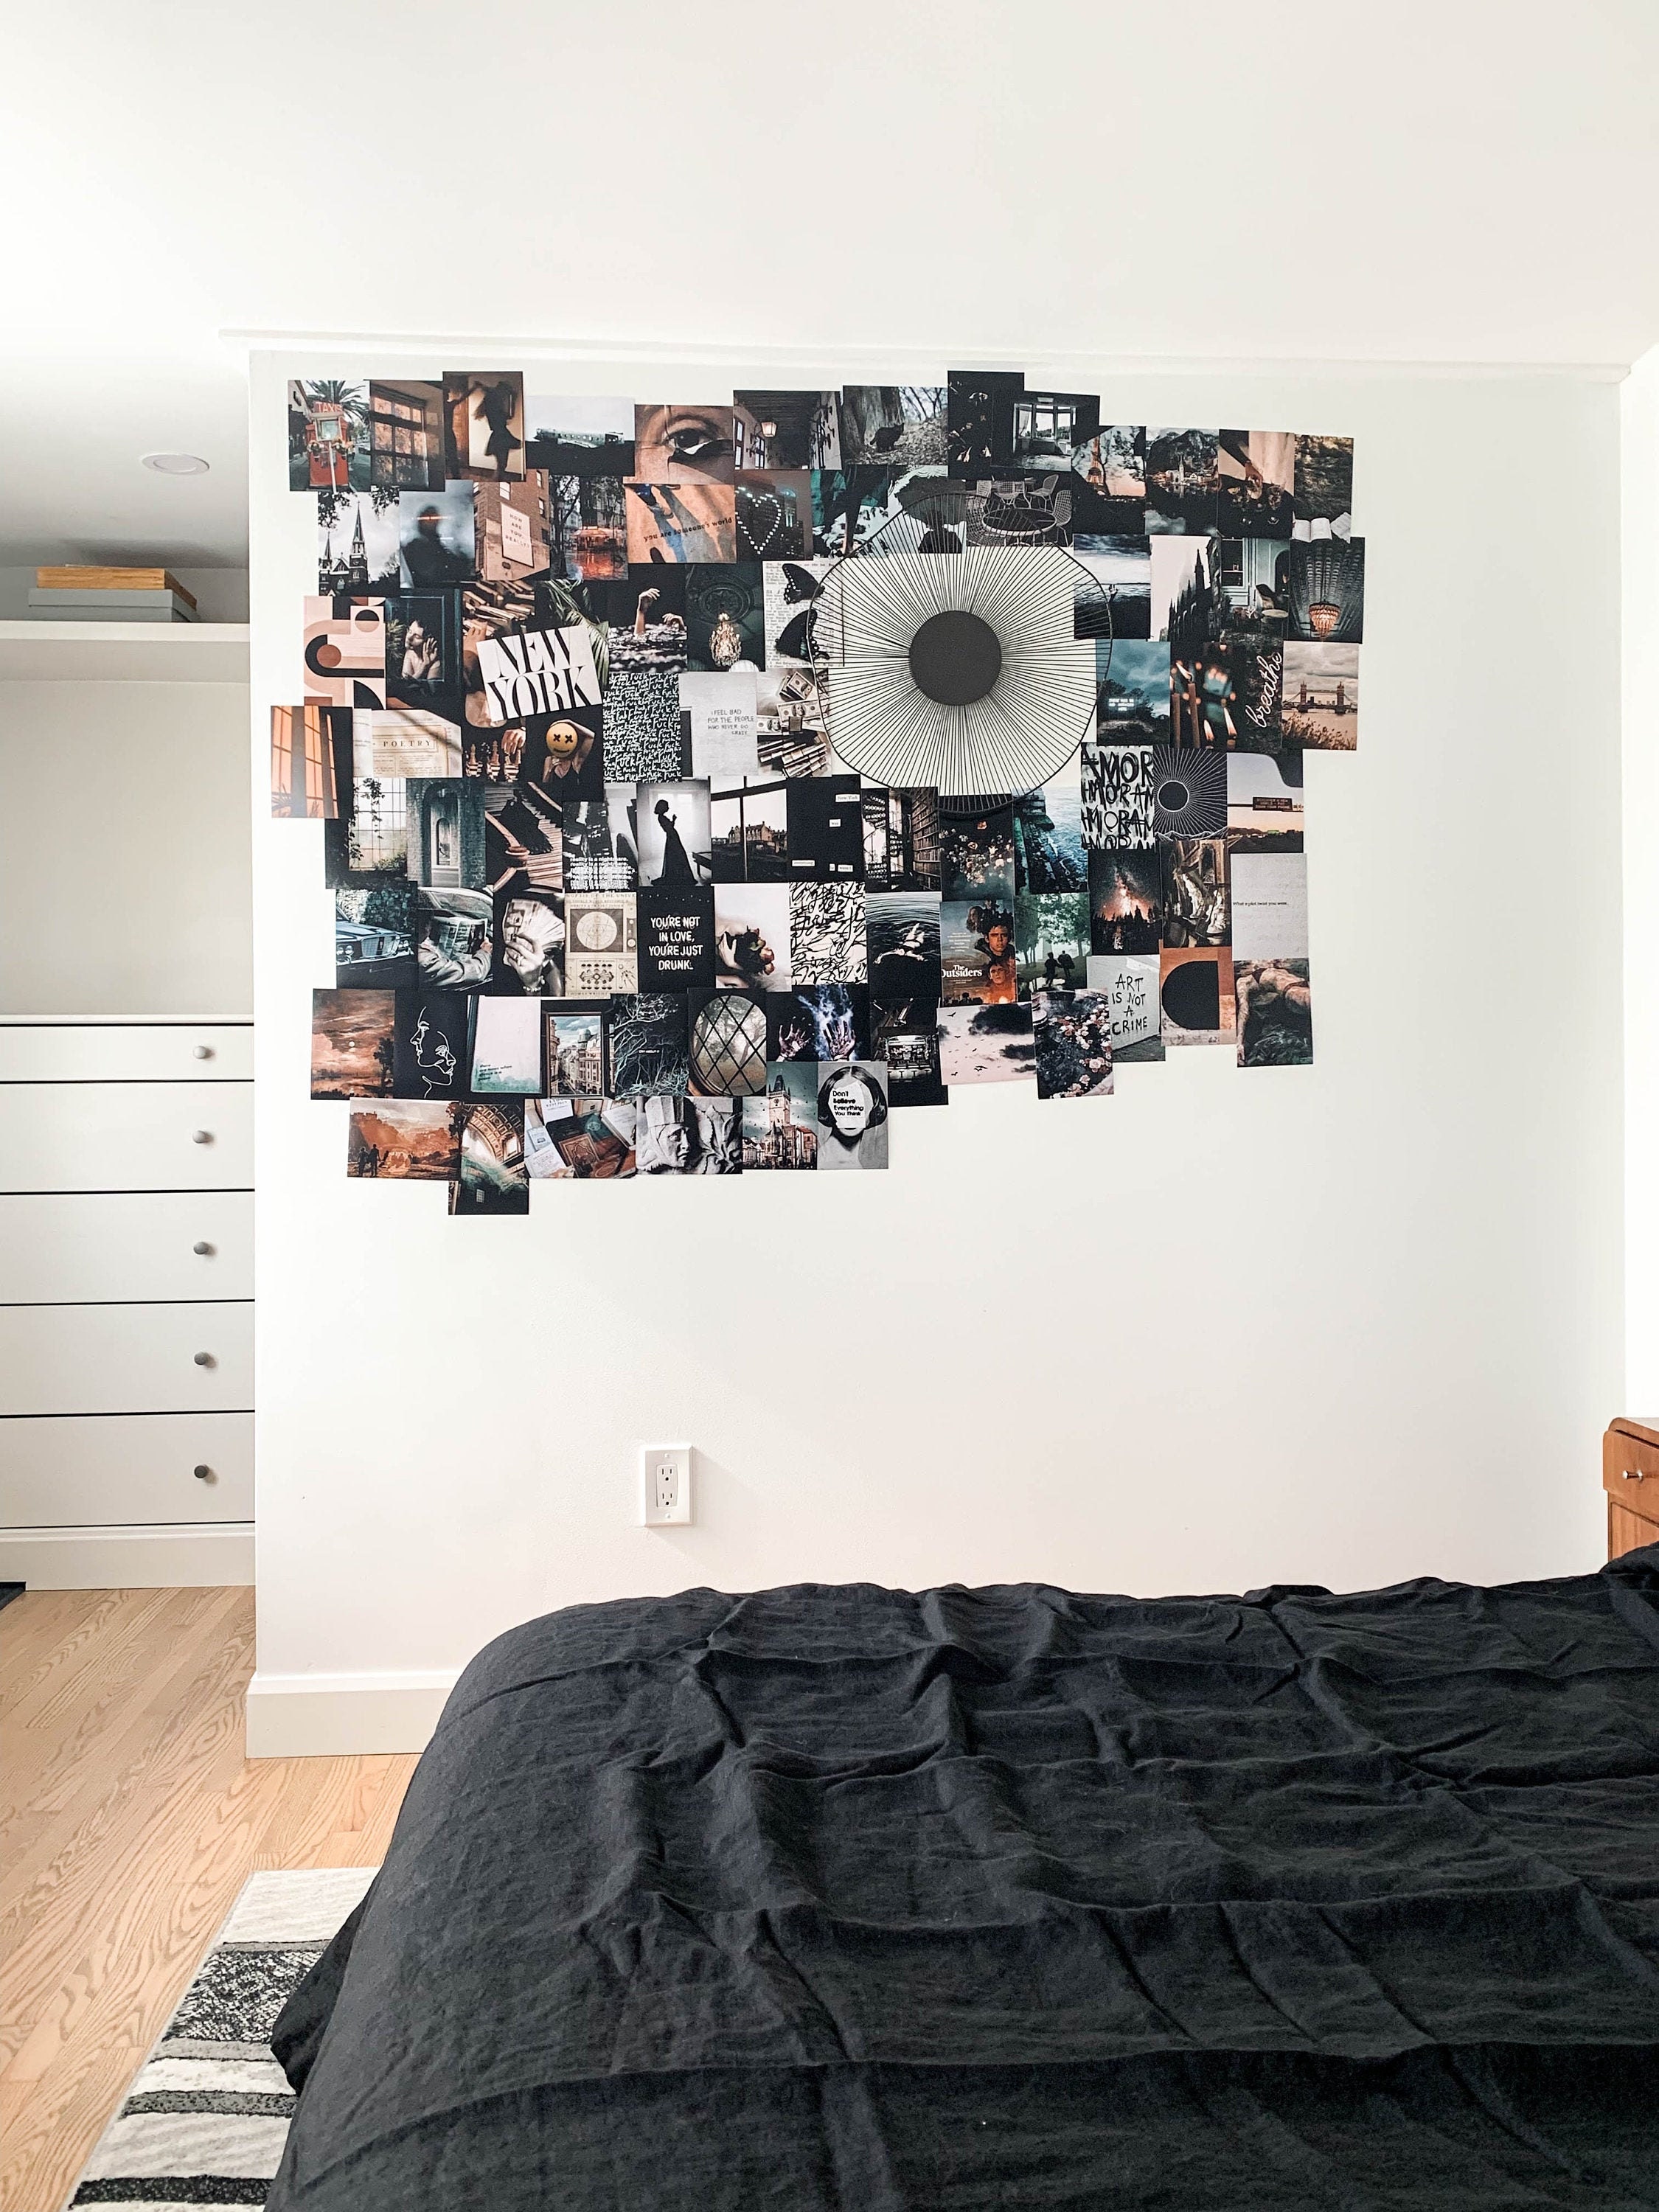 Dark Academia decor style teen room by Aestheticroomdecor on DeviantArt